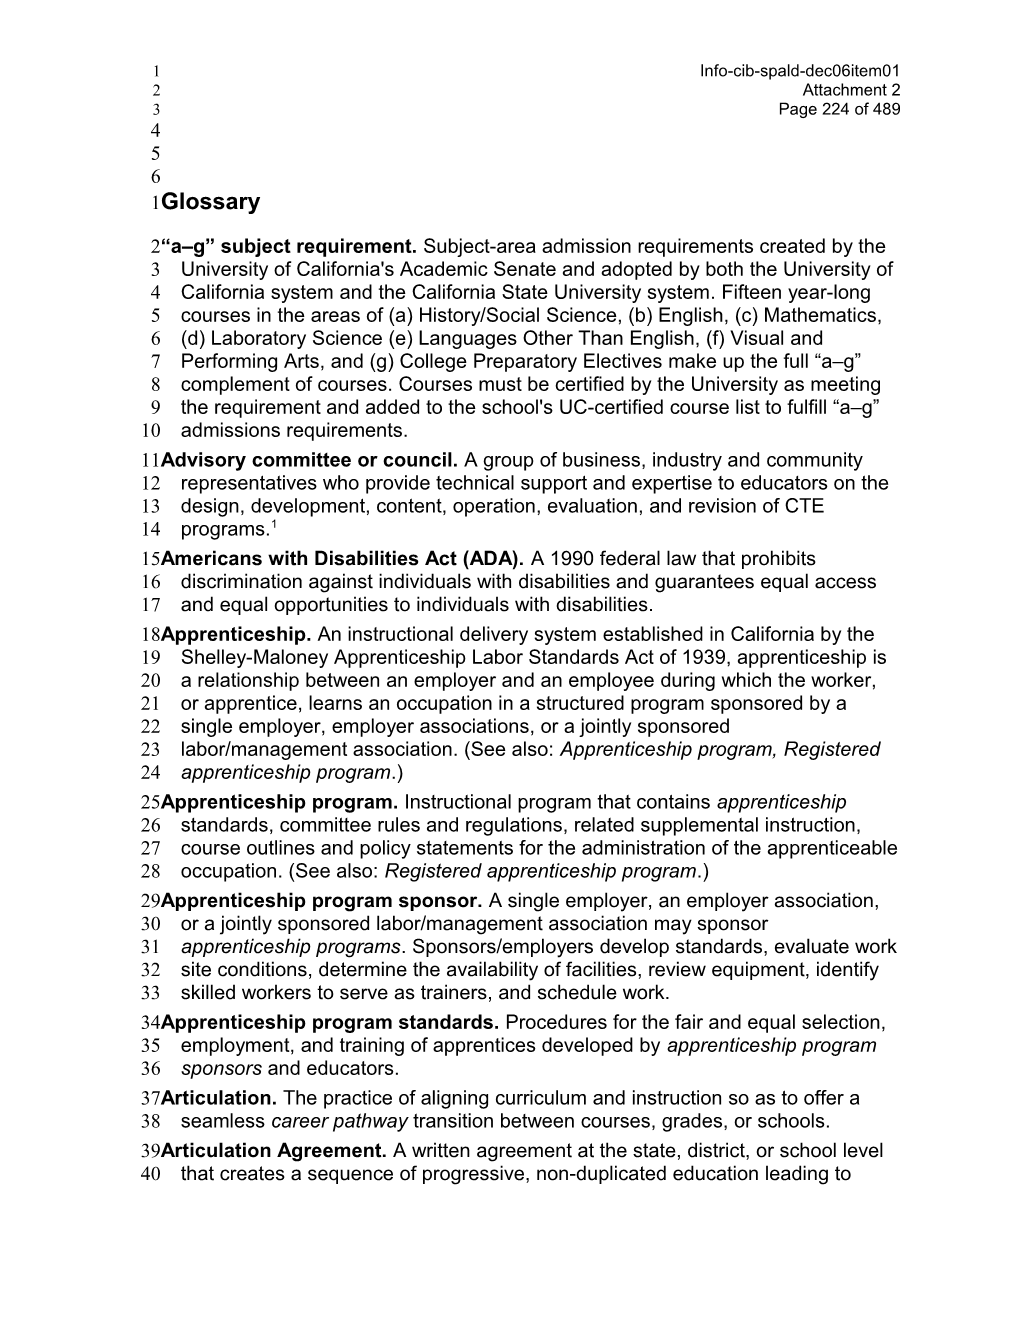 December 2006 SPALD Item 1 Attachment 2Y - Information Memorandum (CA State Board of Education)